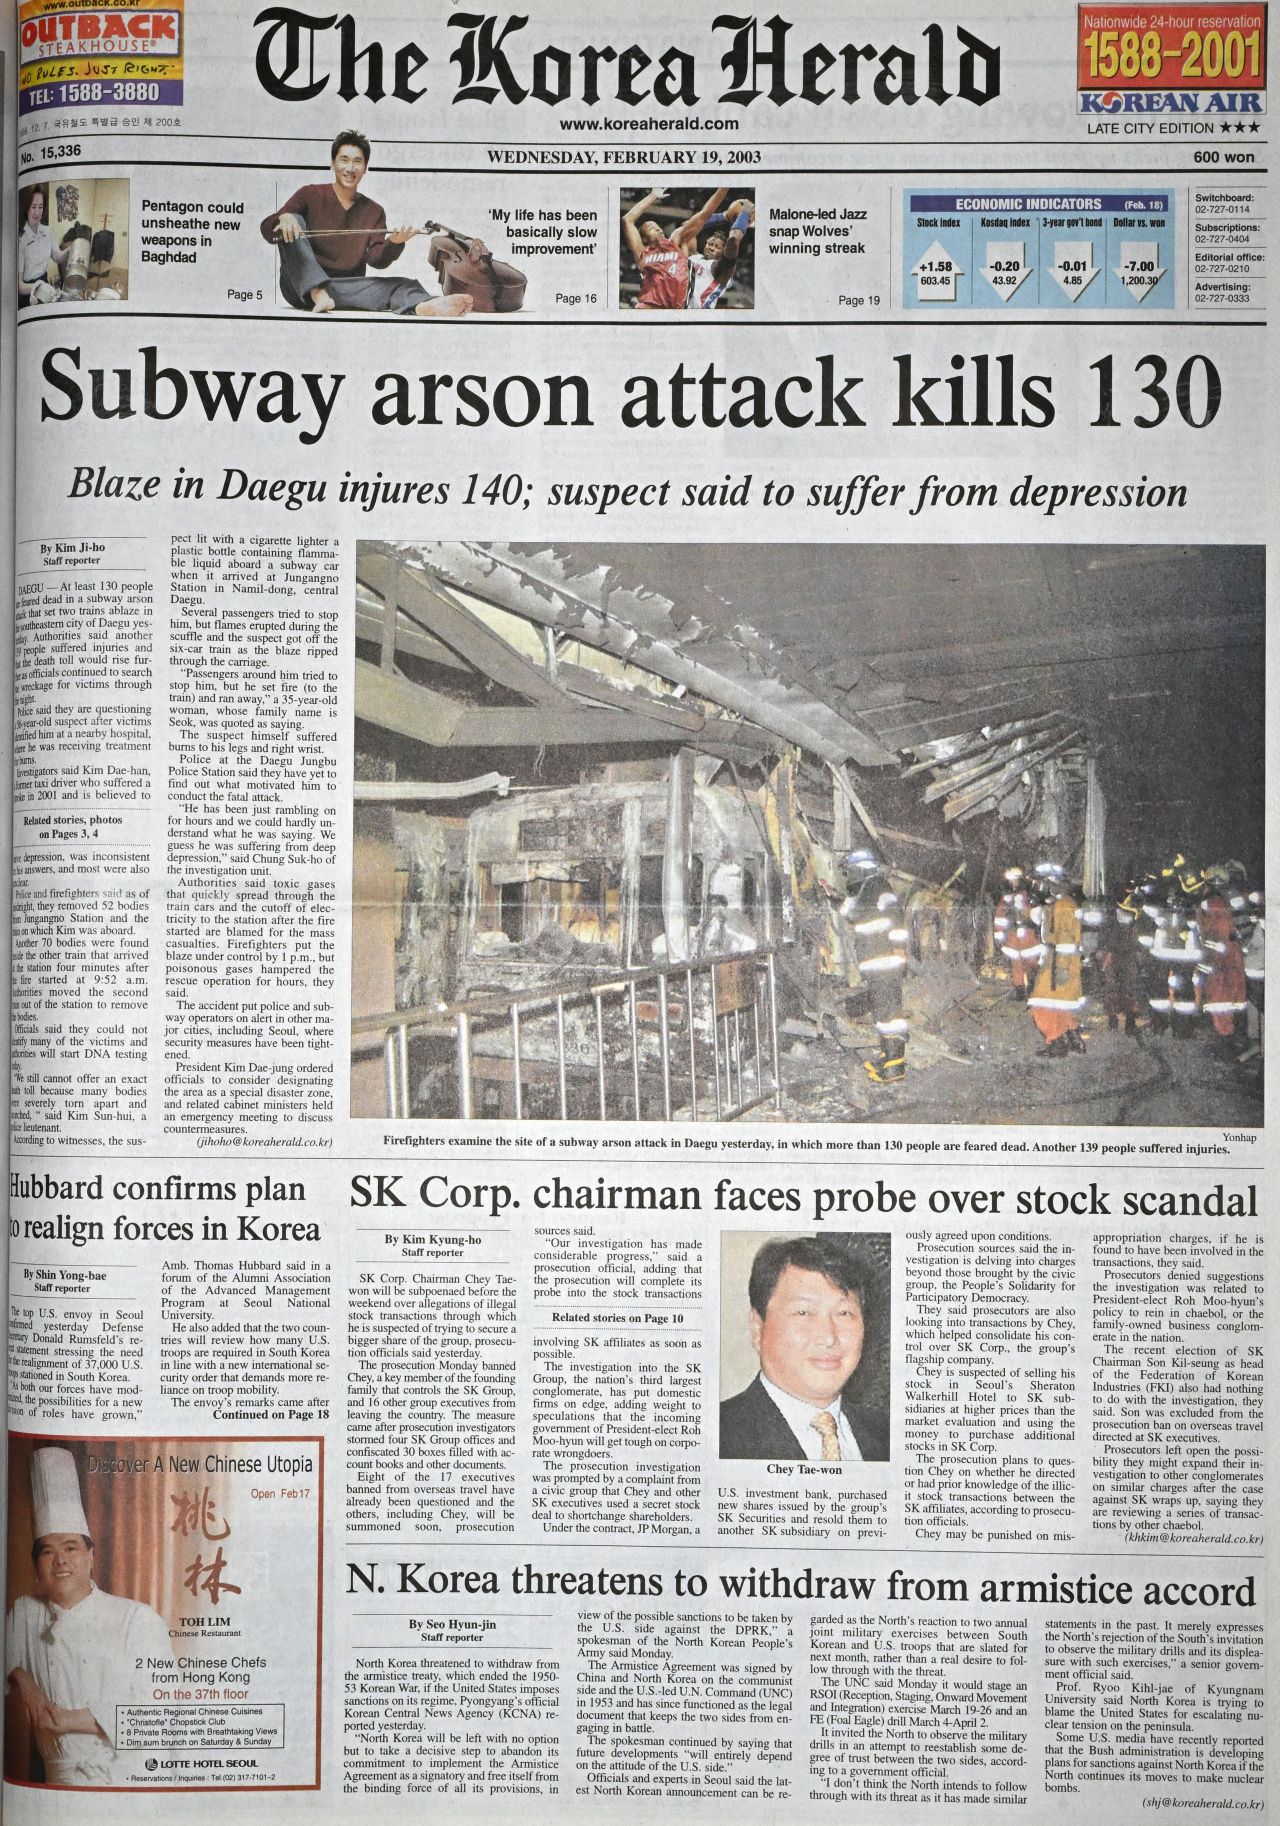 The Feb. 19, 2003 edition of The Korea Herald (The Korea Herald)